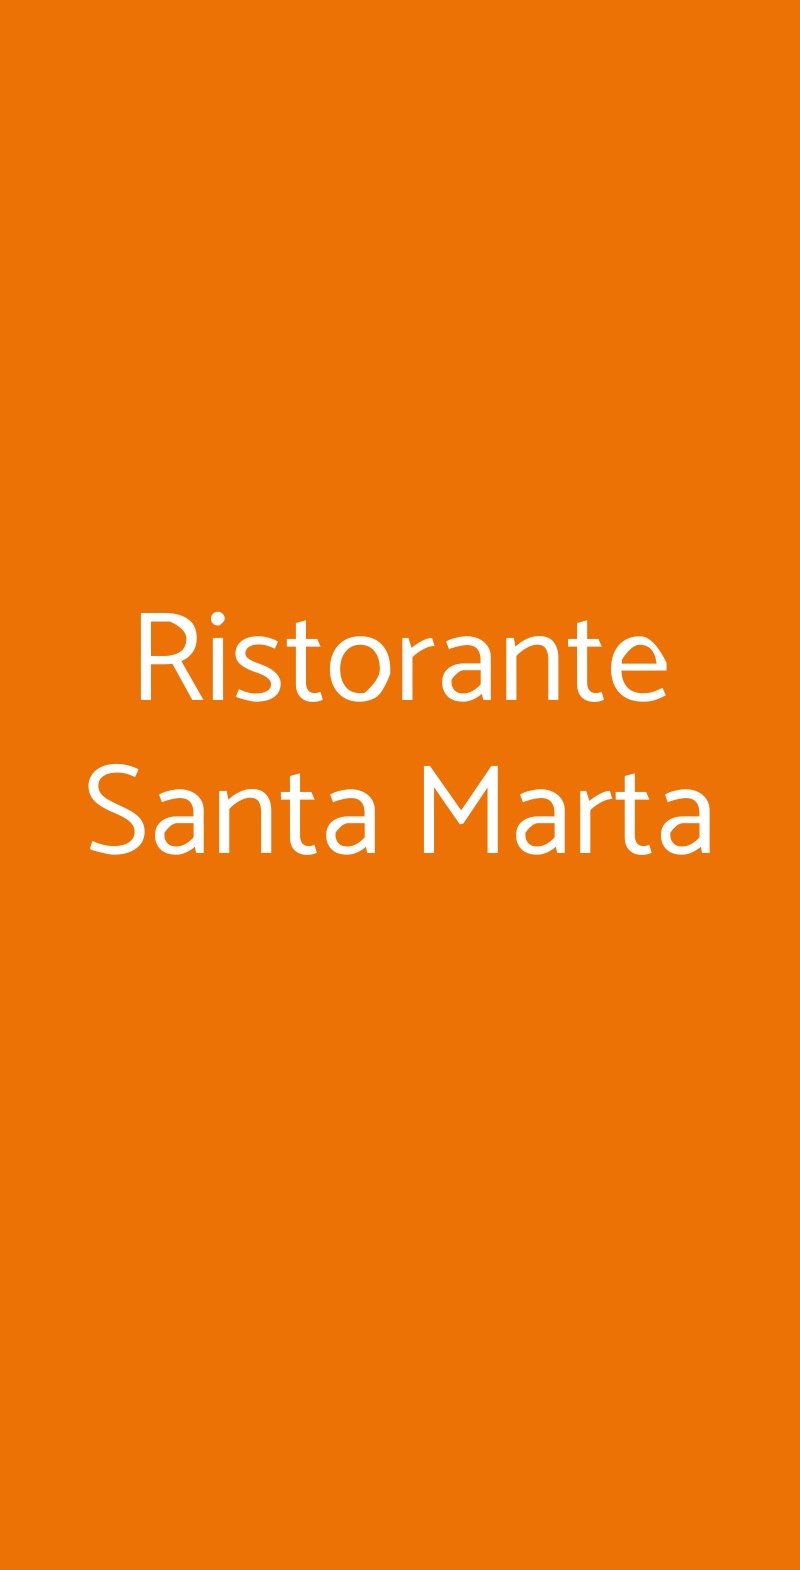 Ristorante Santa Marta Milano menù 1 pagina